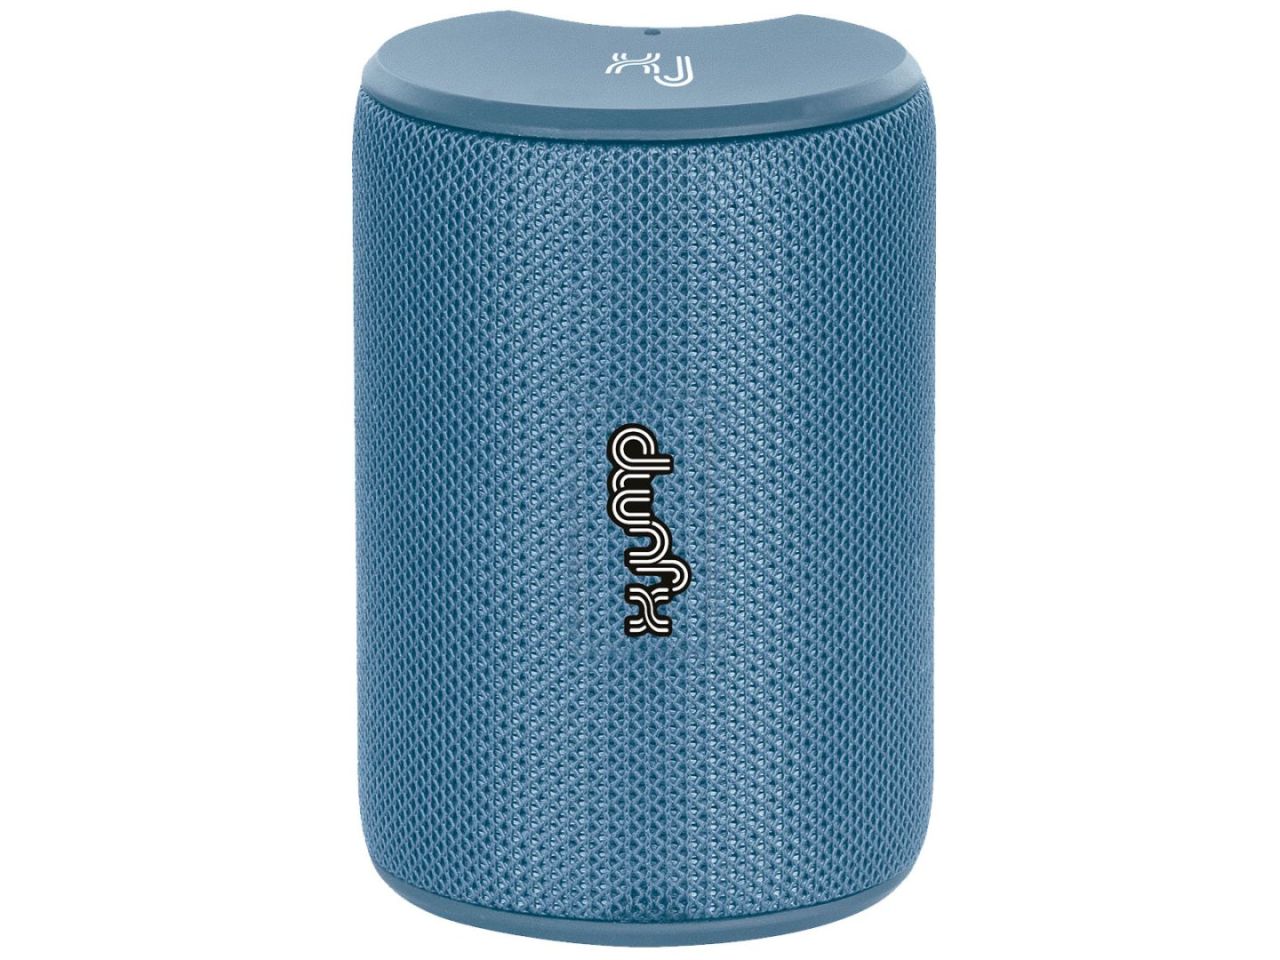 Trevi XJ 50 Bluetooth Speaker Blue